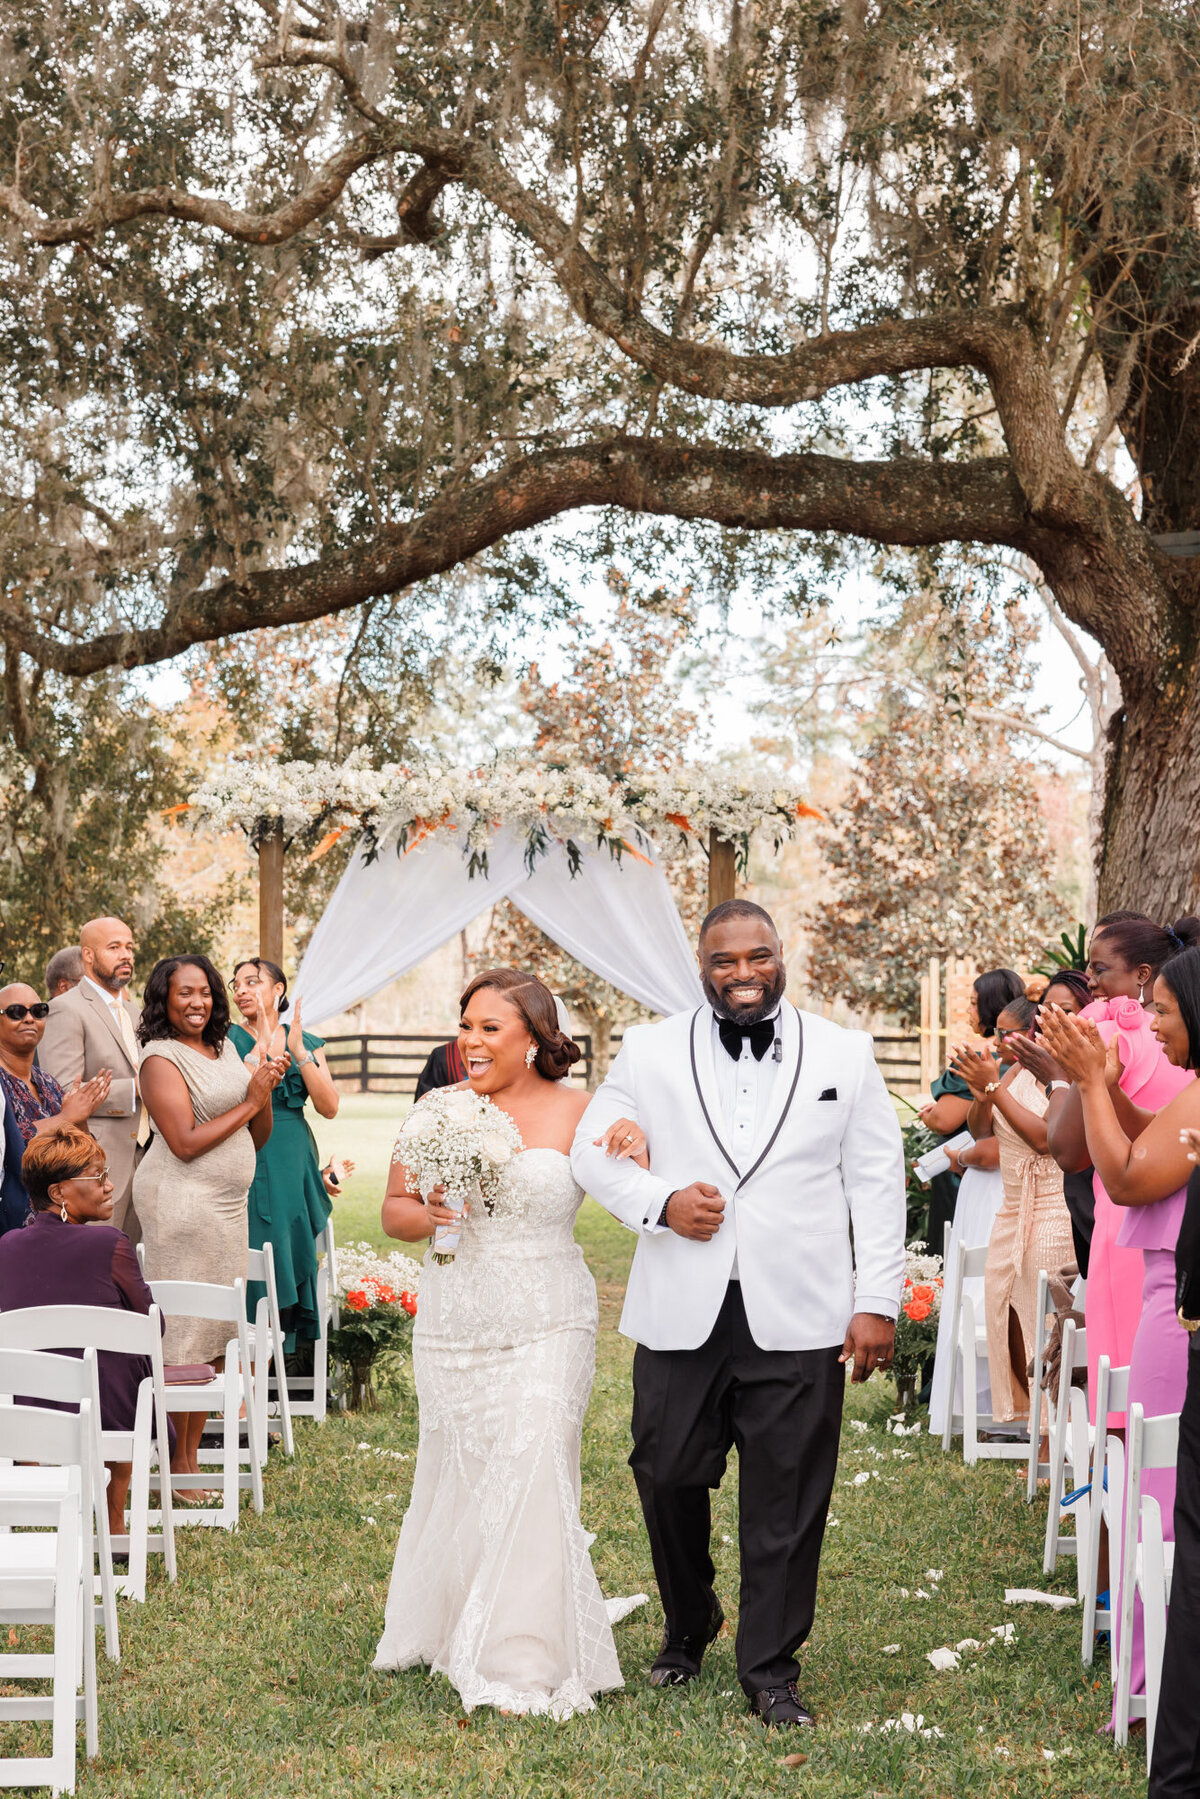 Michael and Mishka-Wedding-Green Cabin Ranch-Astatula, FL-FL Wedding Photographer-Orlando Photographer-Emily Pillon Photography-S-120423-175